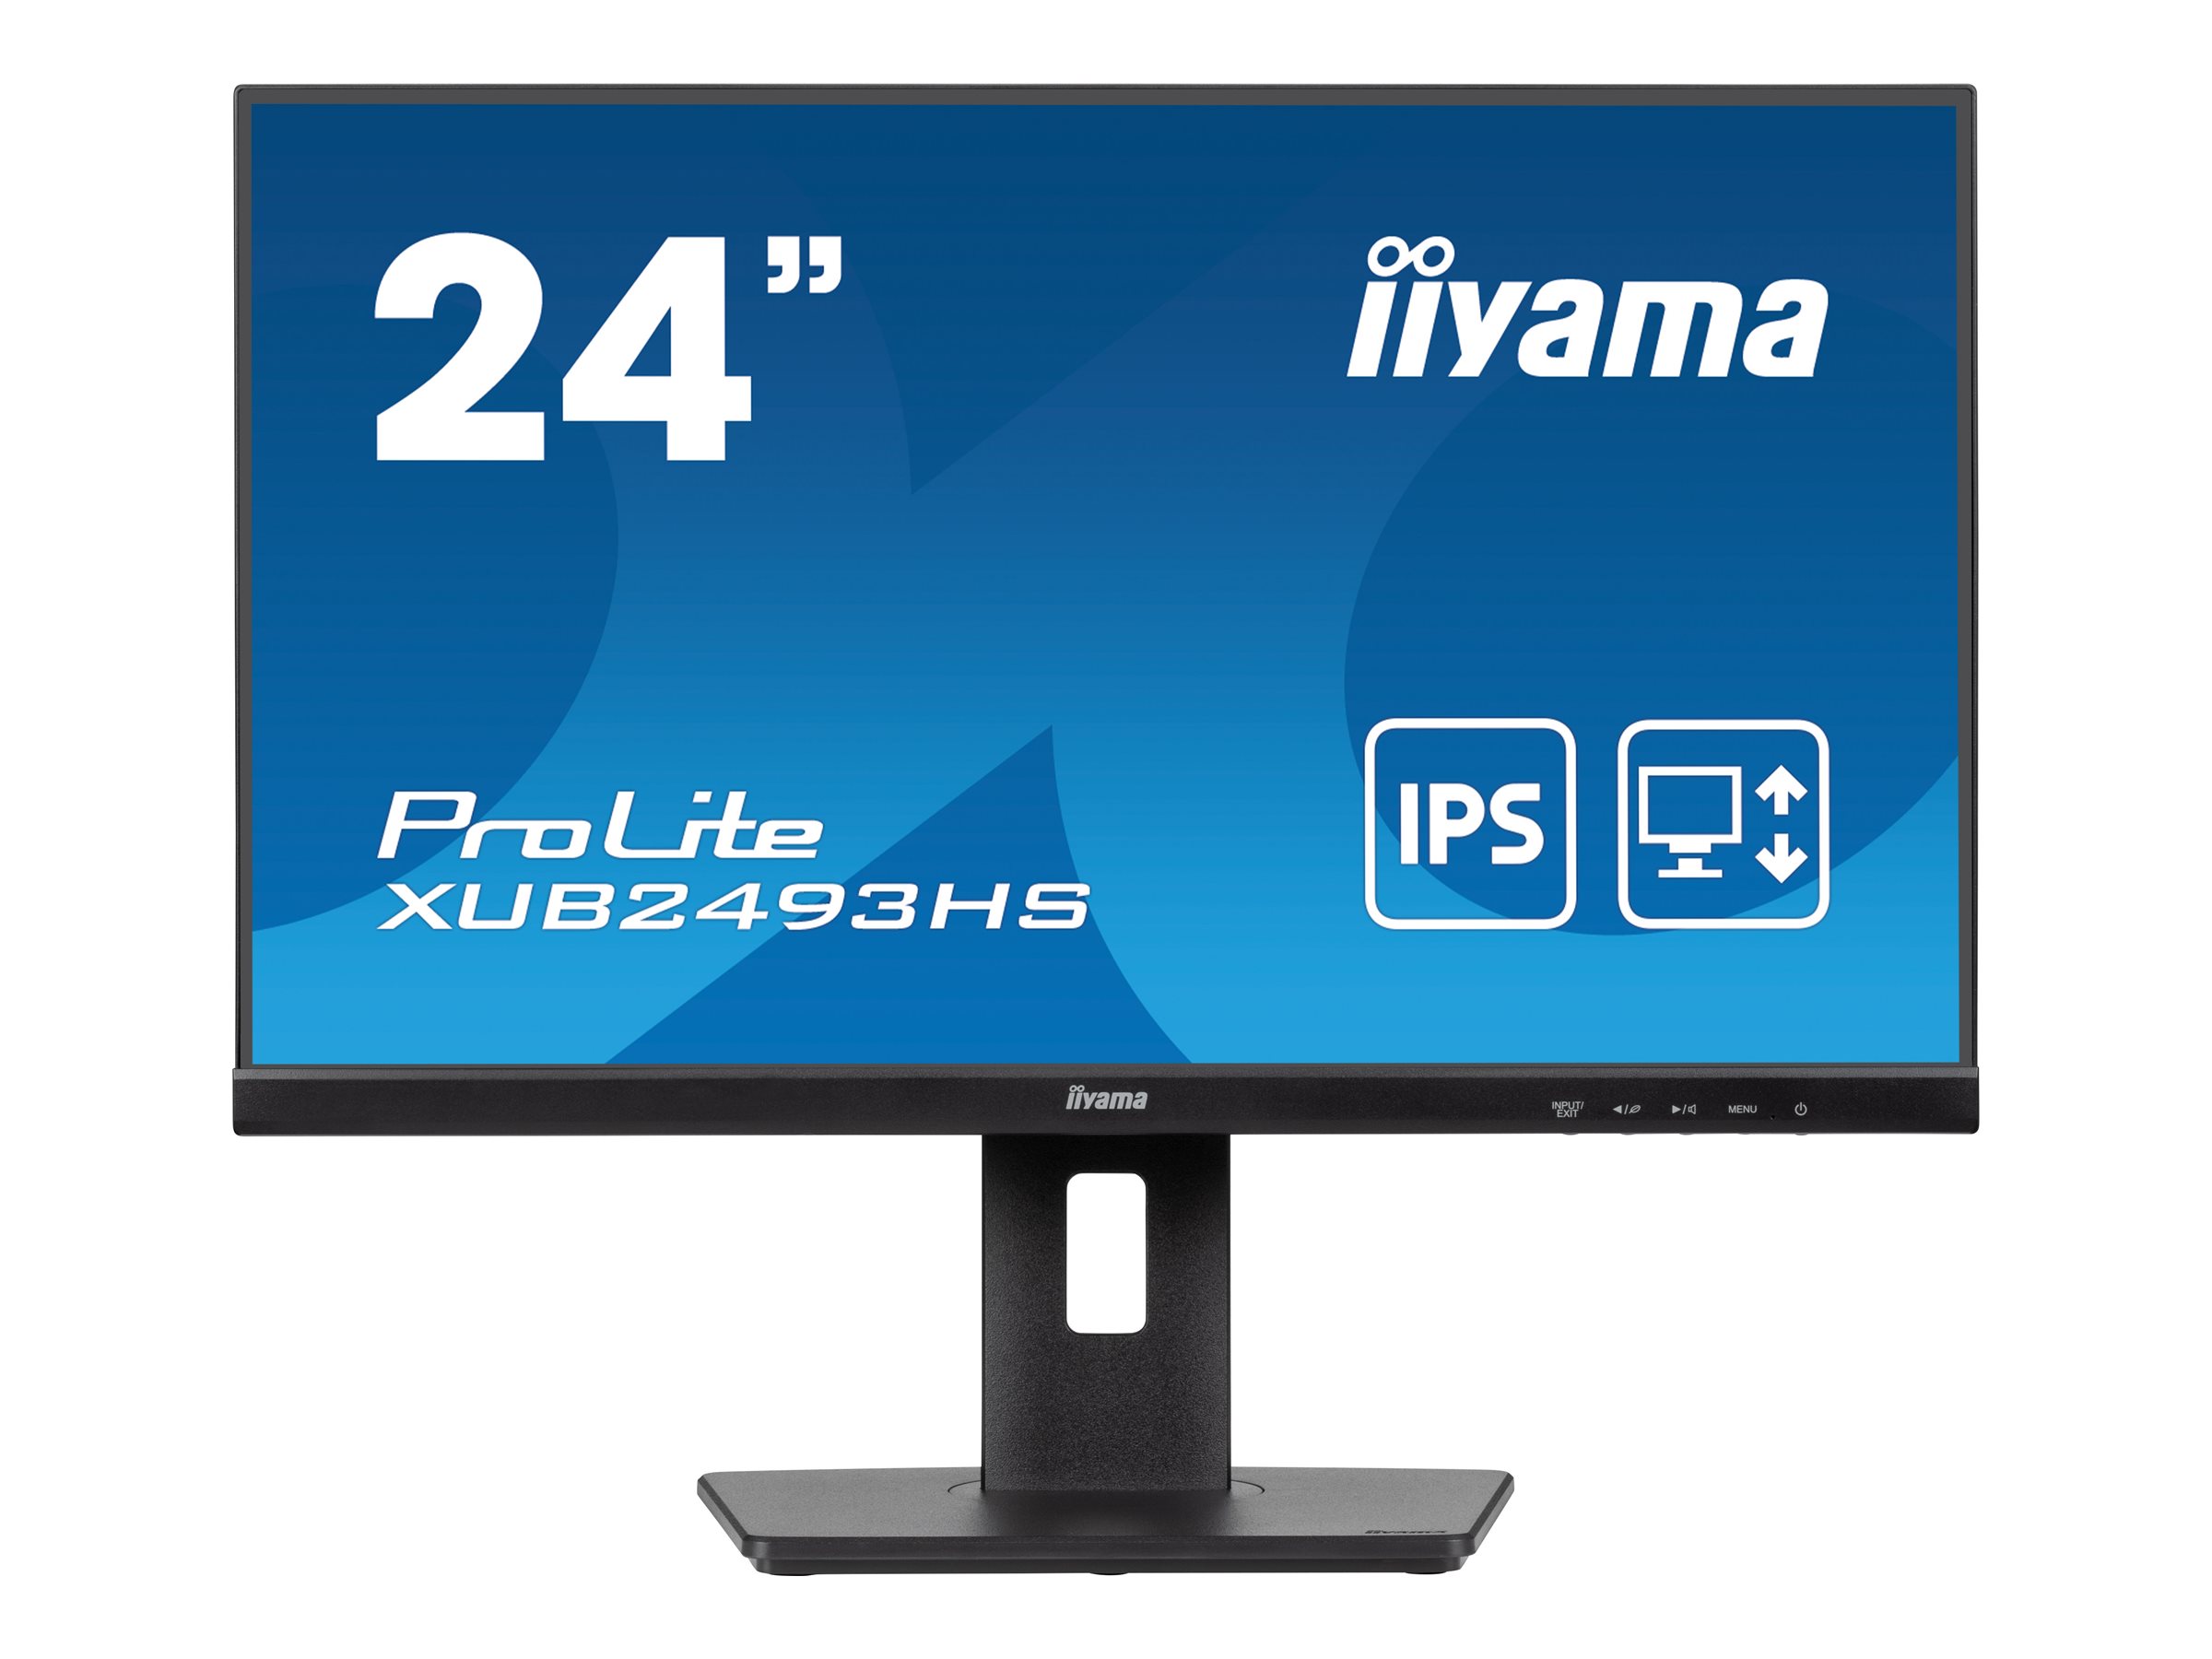 iiyama ProLite XUB2493HS-B6 - Écran LED - 24" (23.8" visualisable) - 1920 x 1080 Full HD (1080p) @ 100 Hz - IPS - 250 cd/m² - 1300:1 - 0.5 ms - HDMI, DisplayPort - haut-parleurs - noir, mat - XUB2493HS-B6 - Écrans d'ordinateur